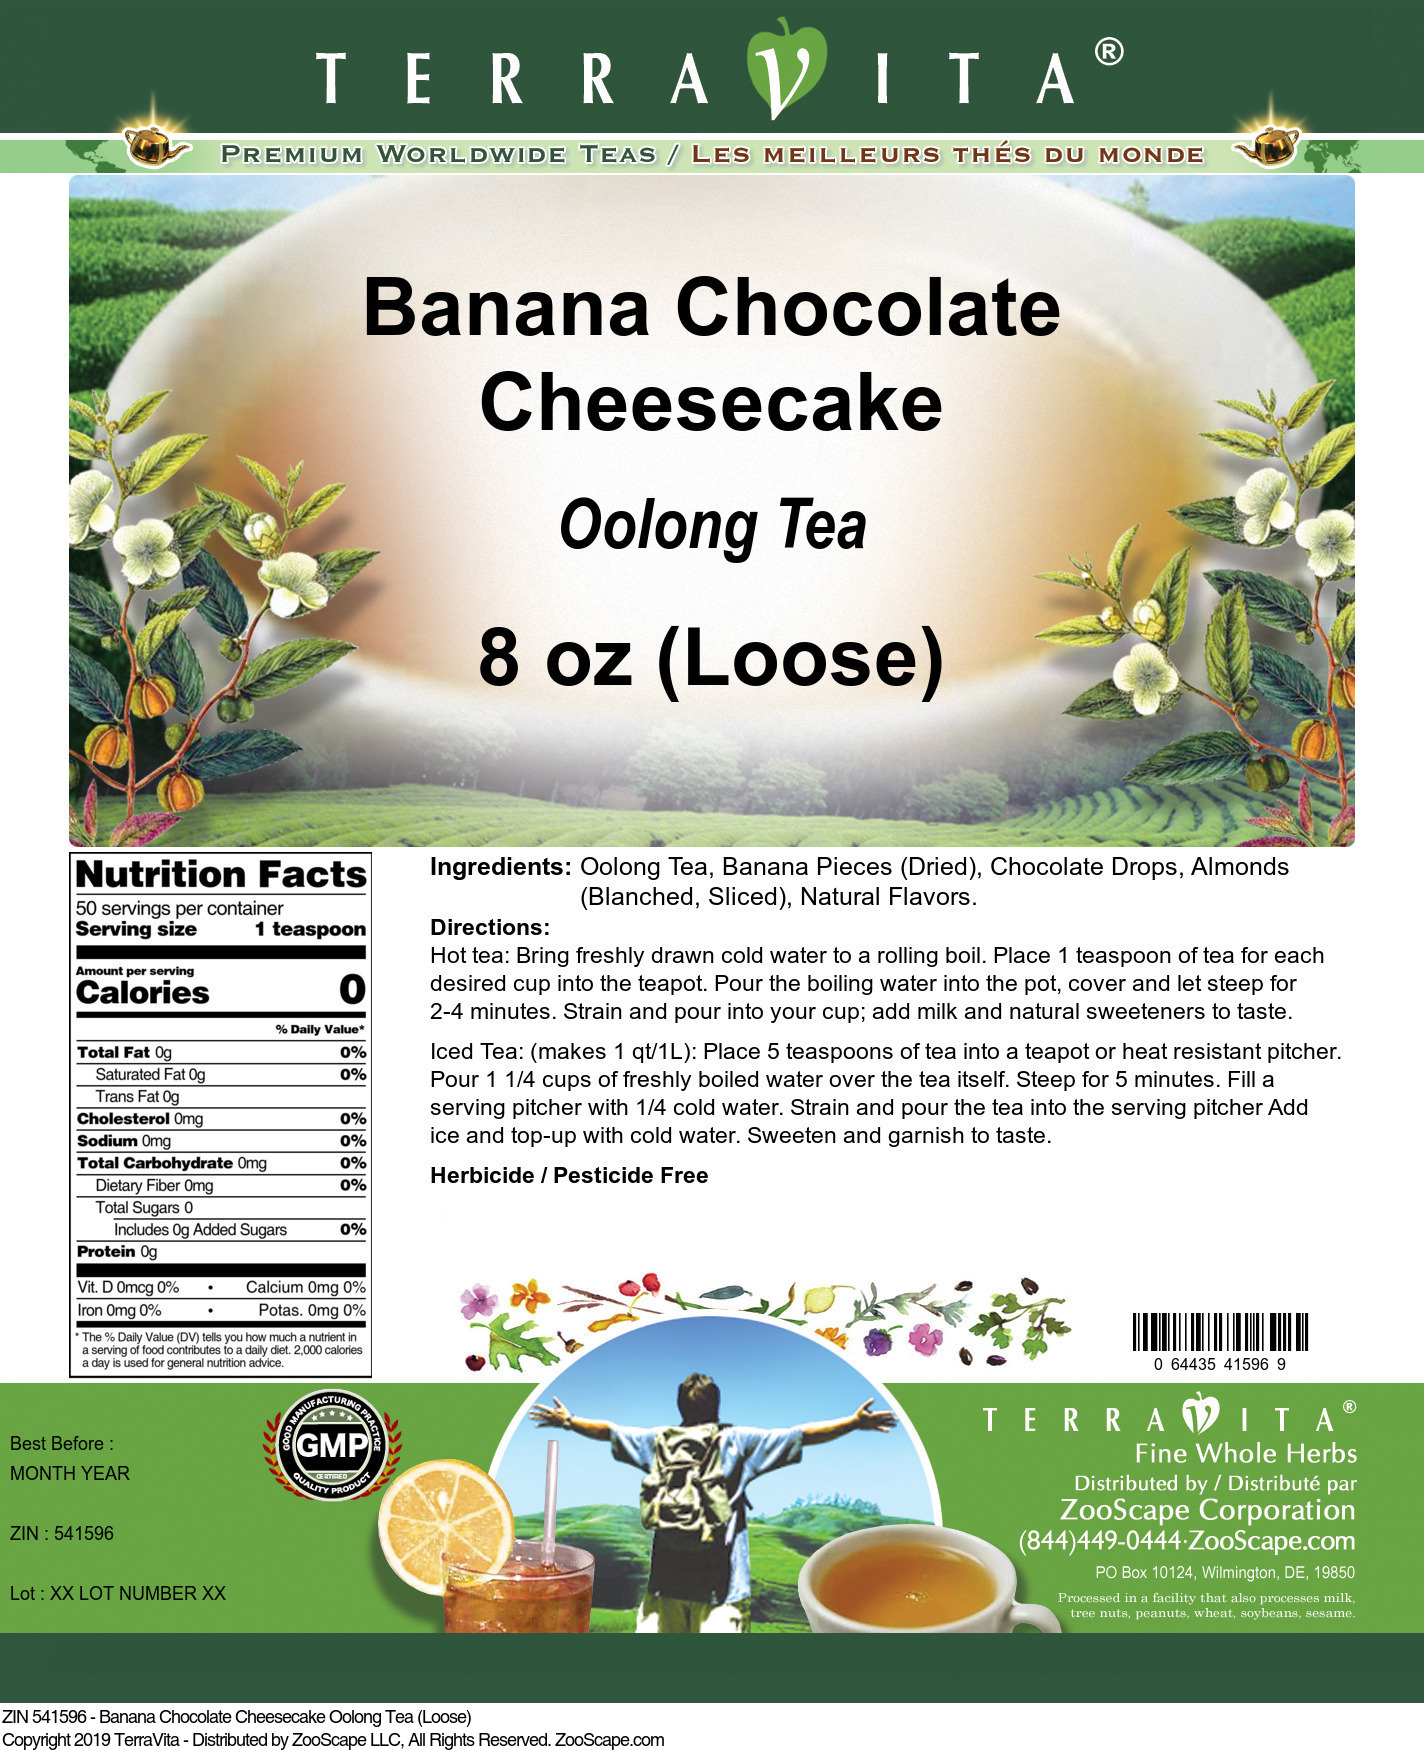 Banana Chocolate Cheesecake Oolong Tea (Loose) - Label